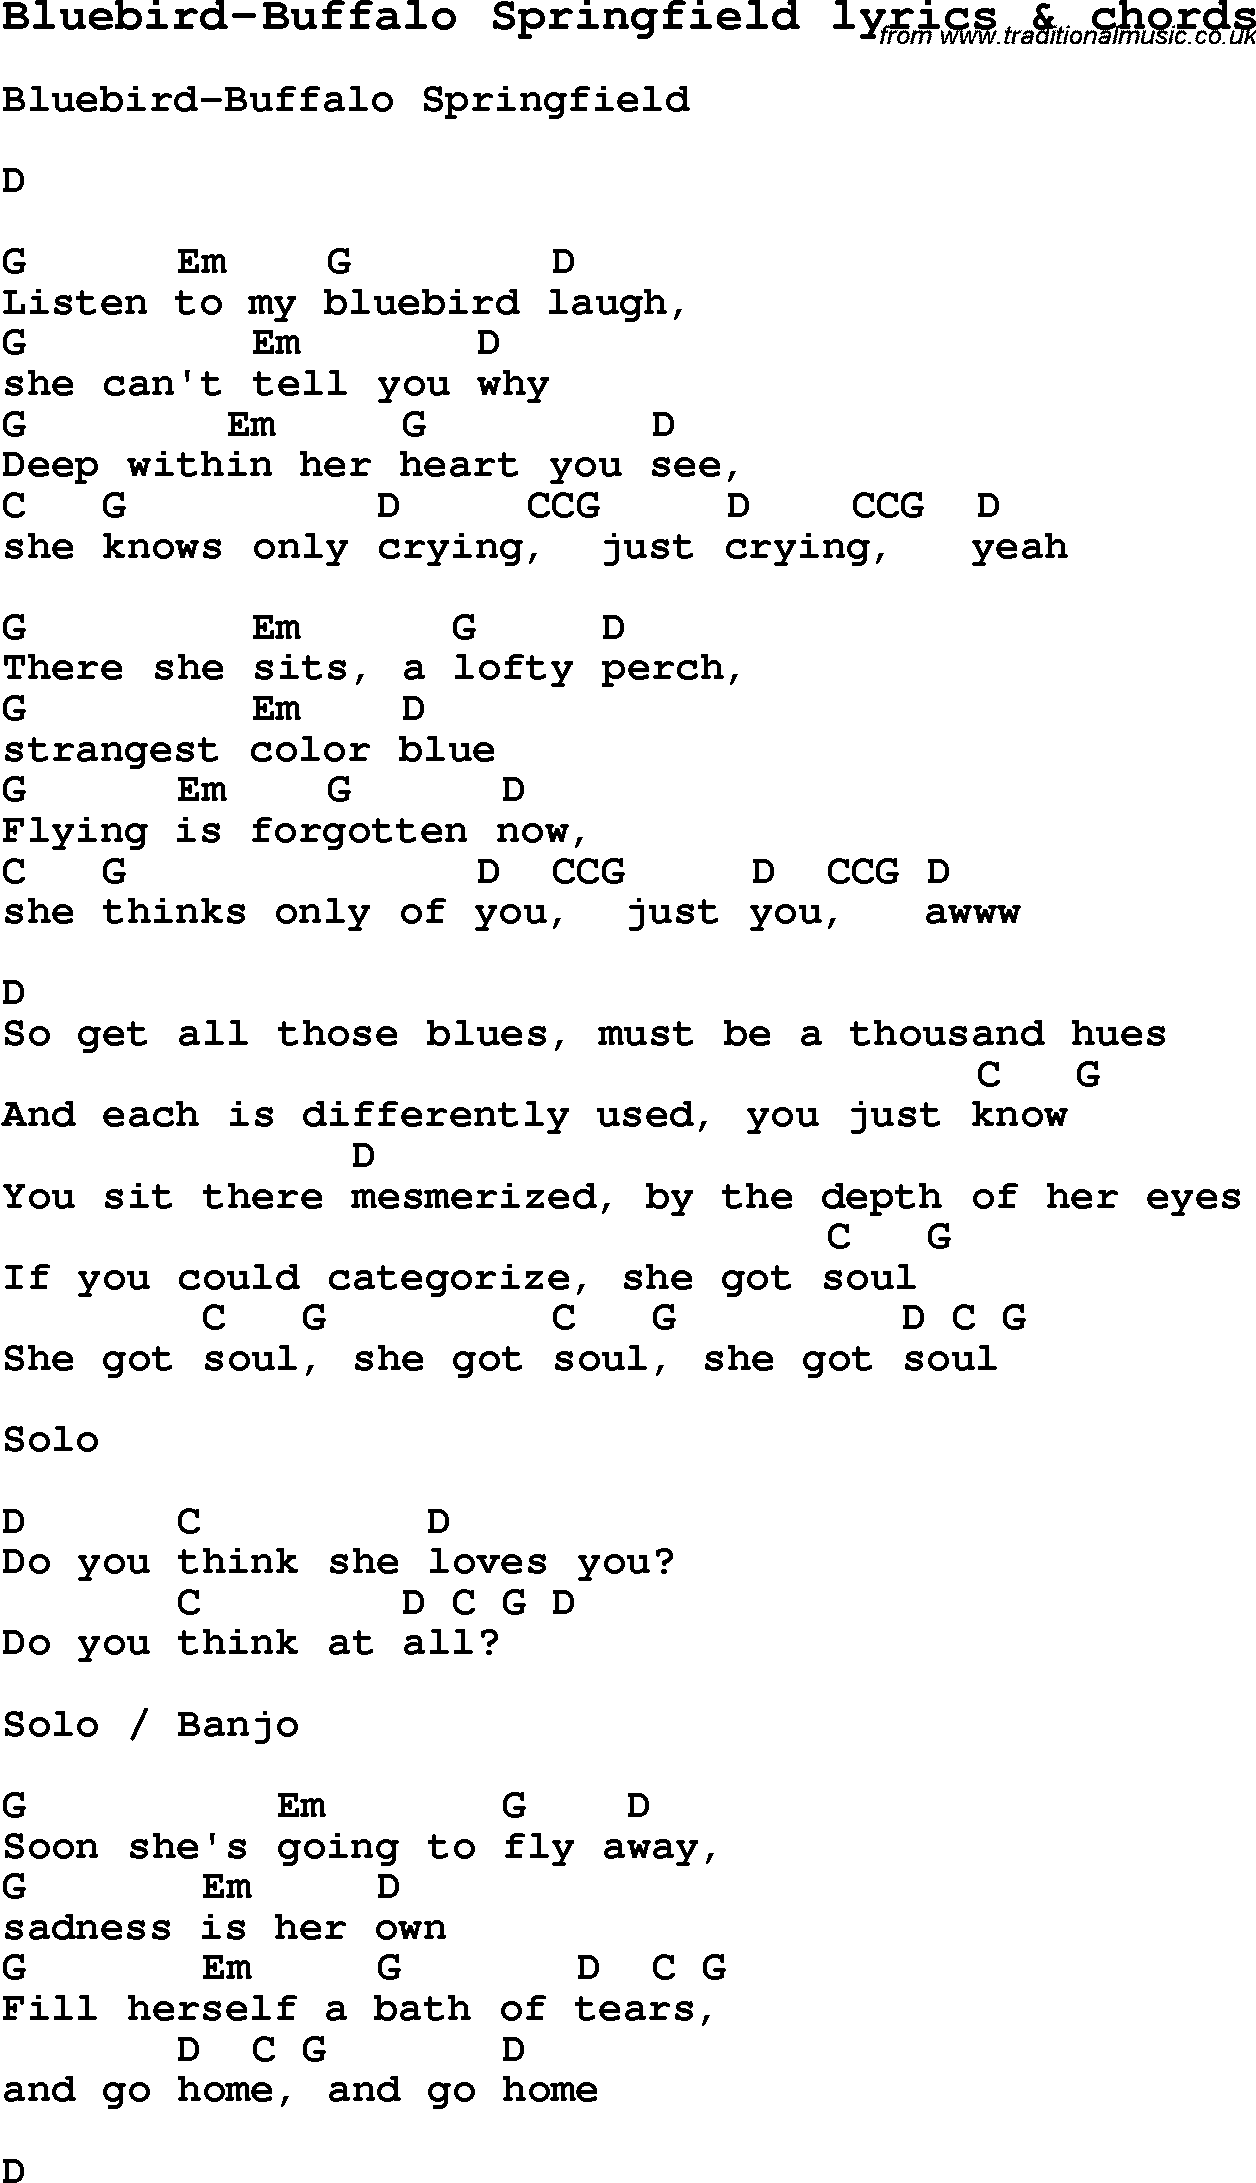 Love Song Lyrics for: Bluebird-Buffalo Springfield with chords for Ukulele, Guitar Banjo etc.